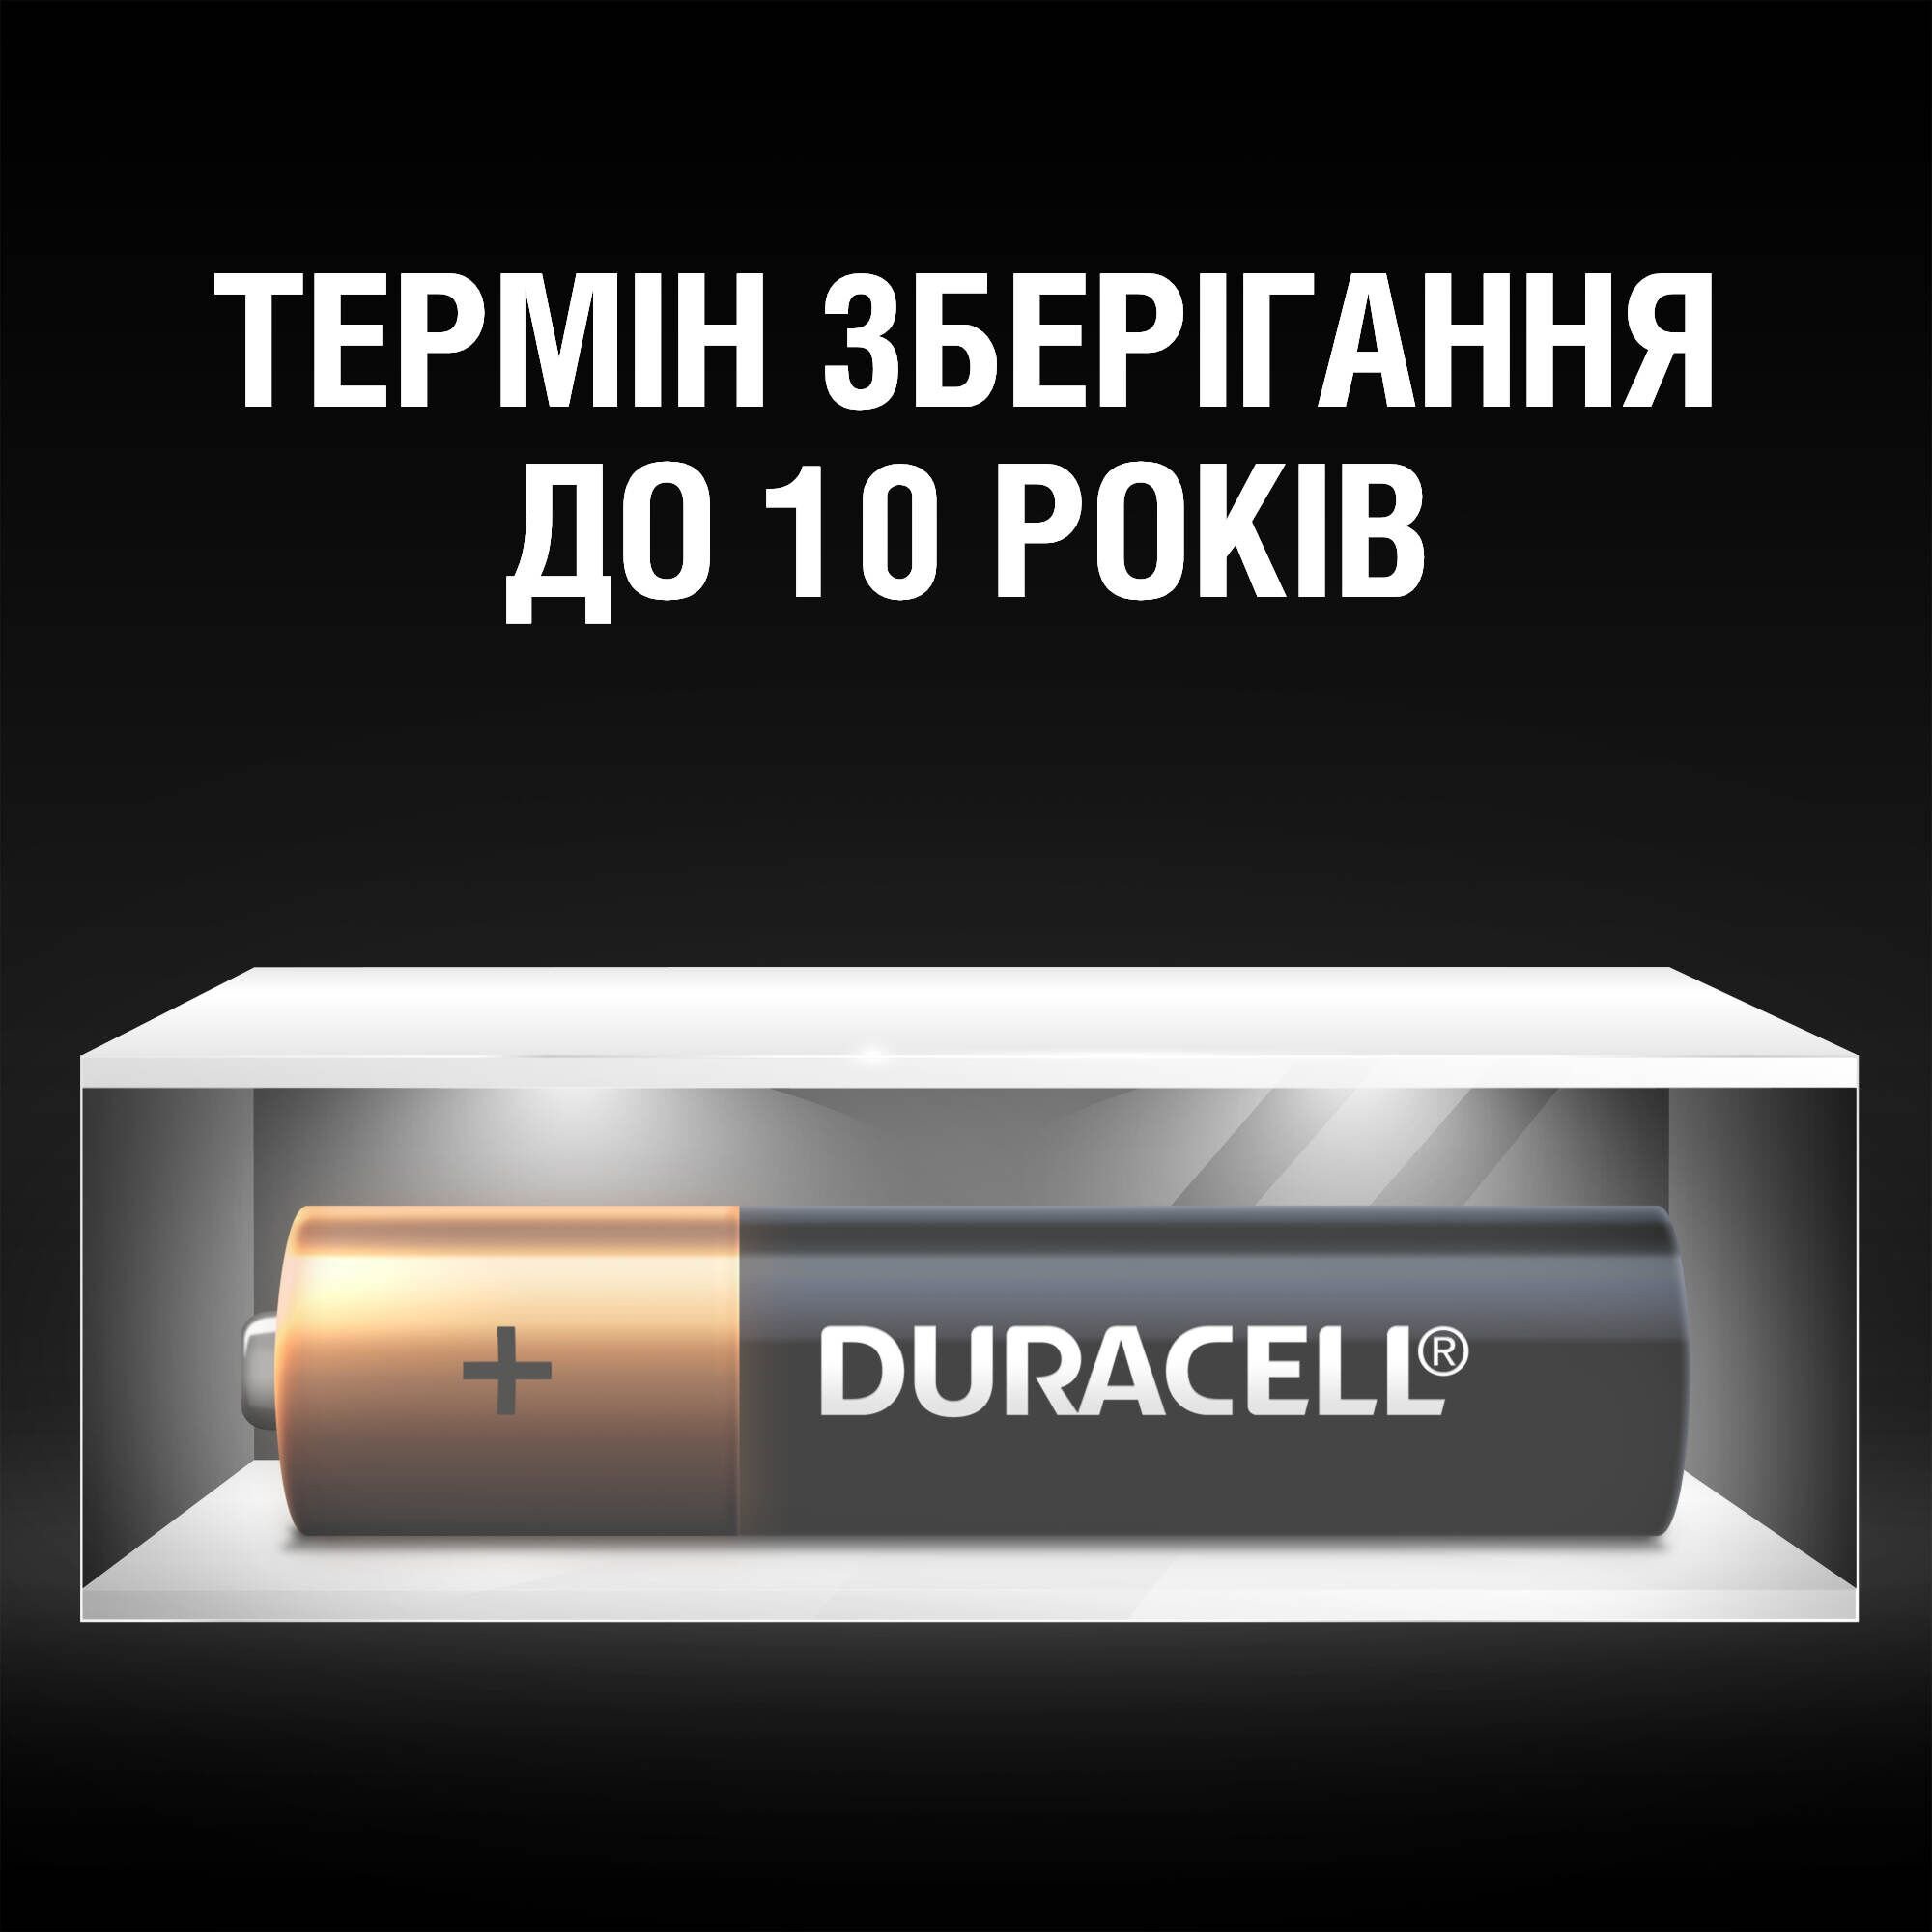 Щелочные батарейки мизинчиковые Duracell Basic 1.5 V AA LR03/MN2400, 12 шт. - фото 7